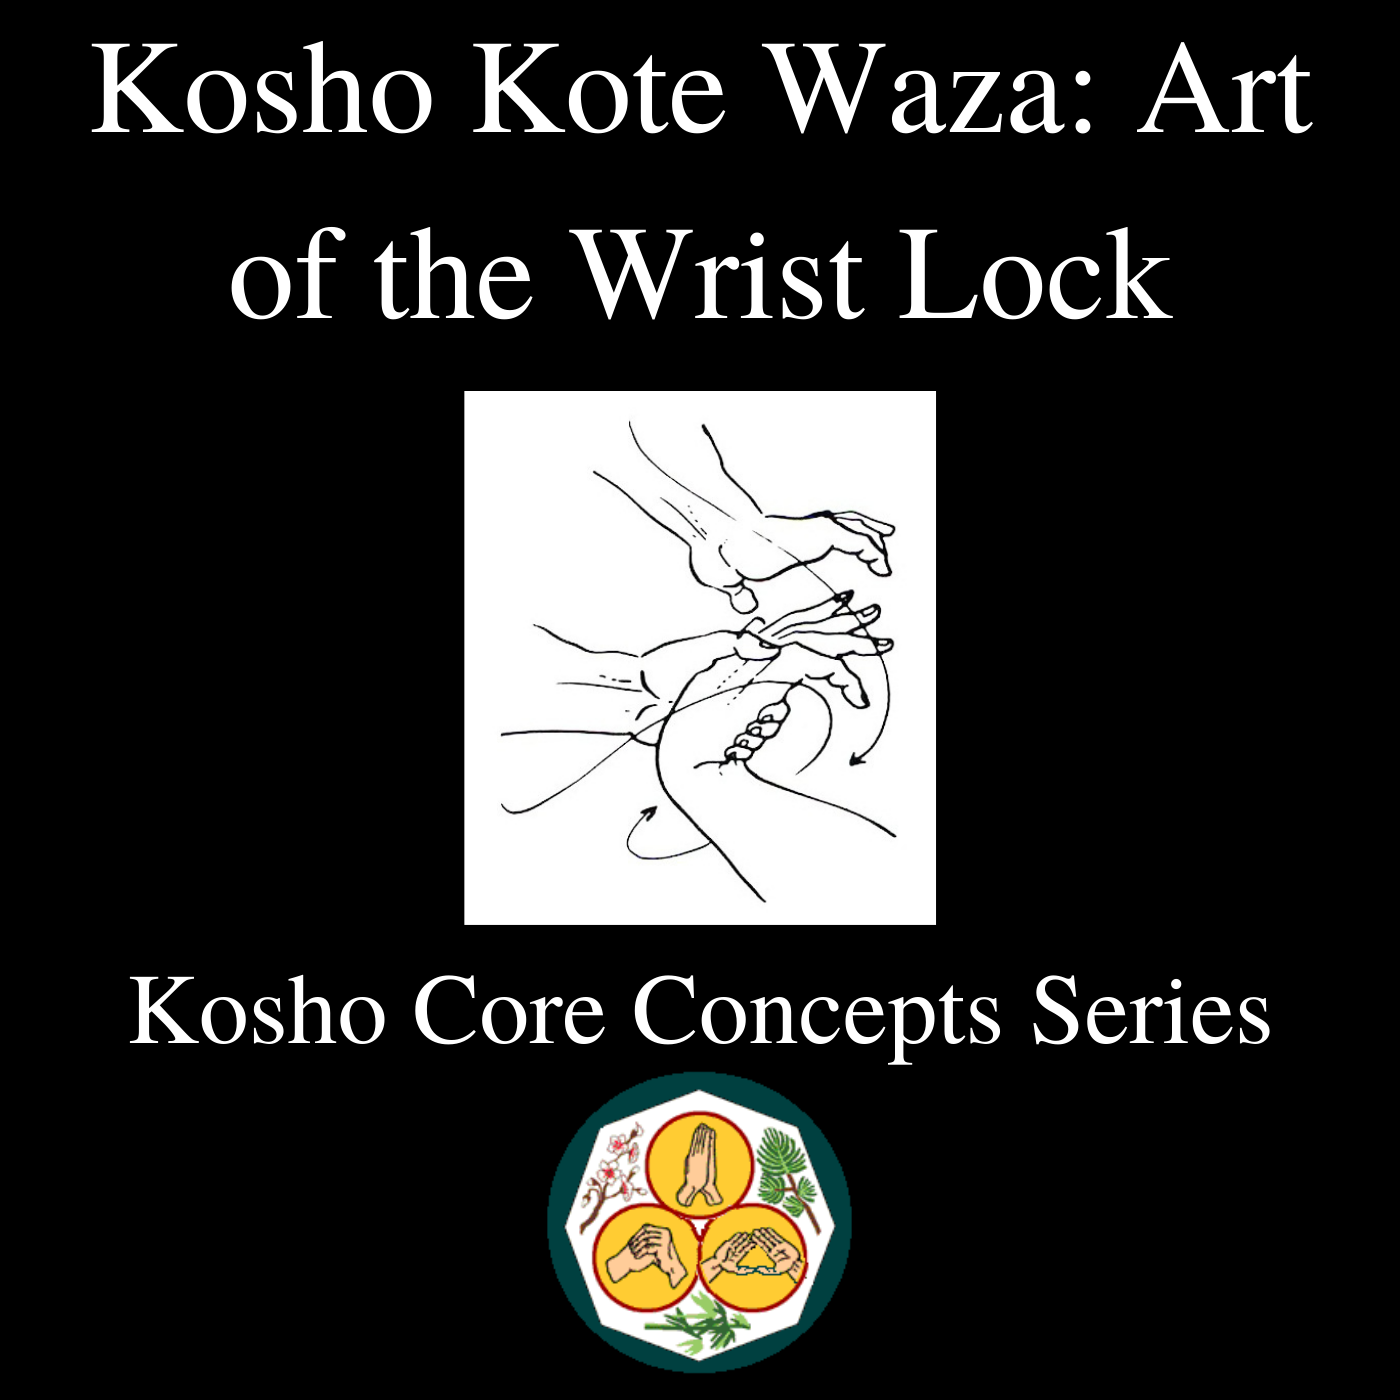 * Kosho Kote Waza Art of the Wrist Lock